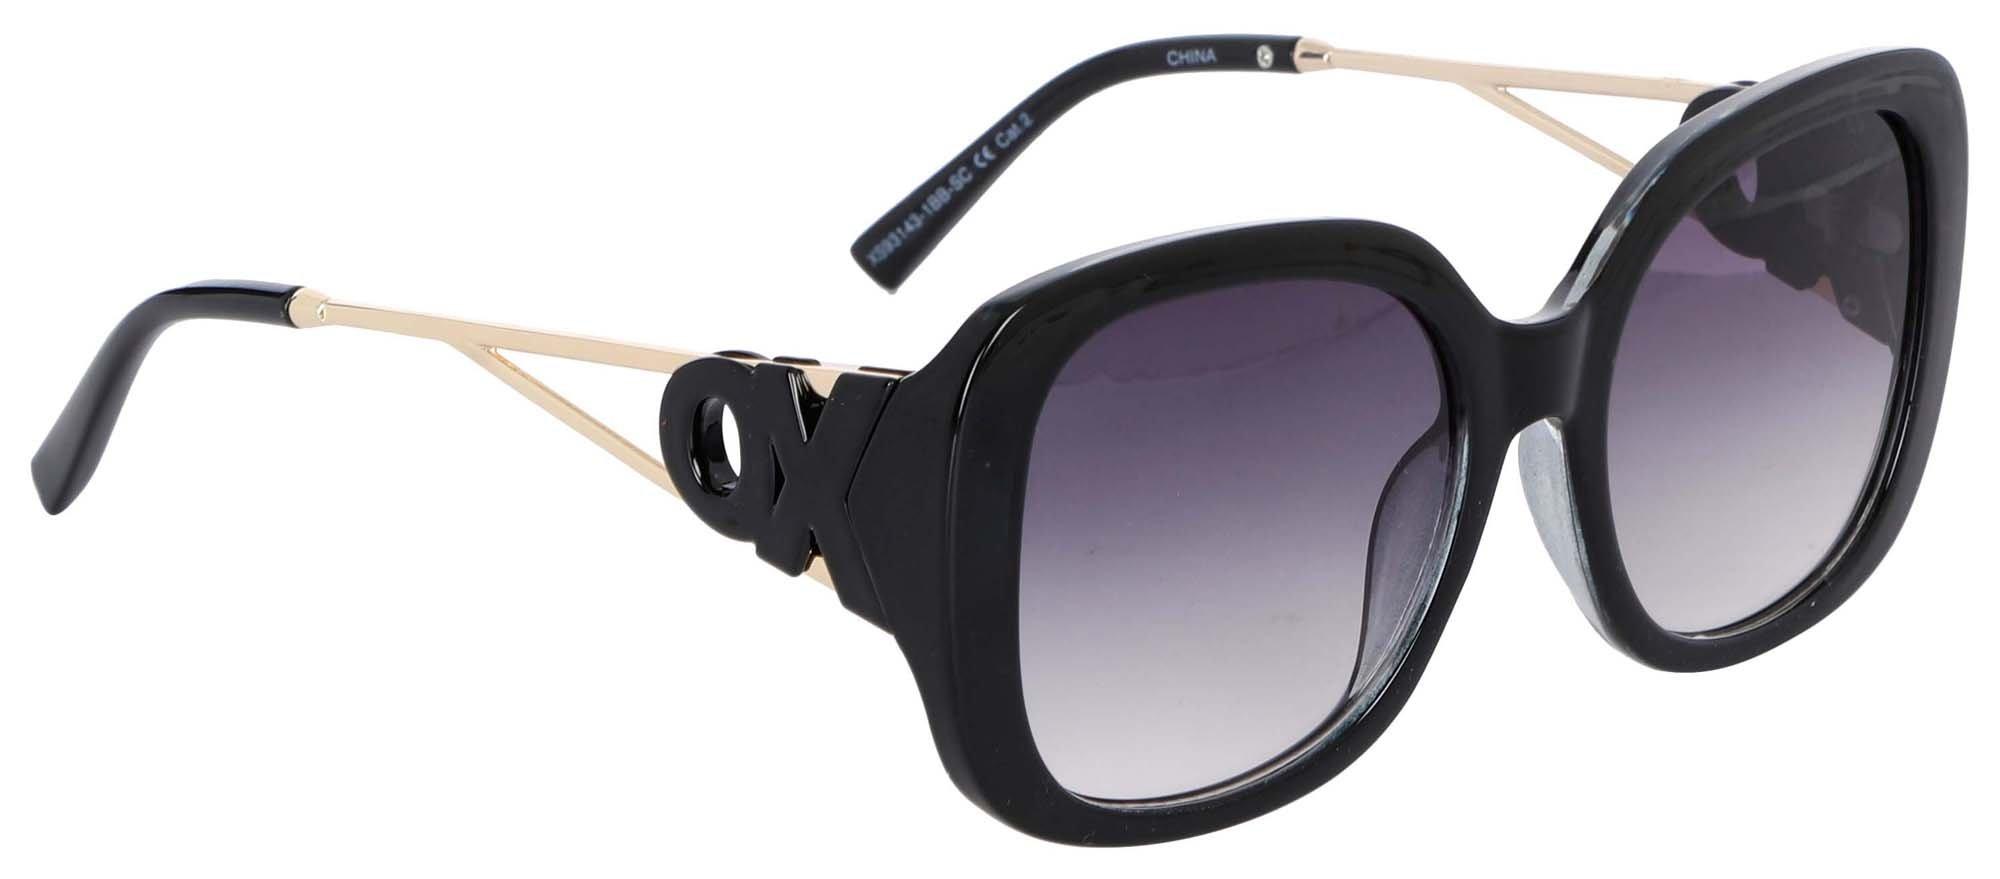 Women's Sunglasses - Black